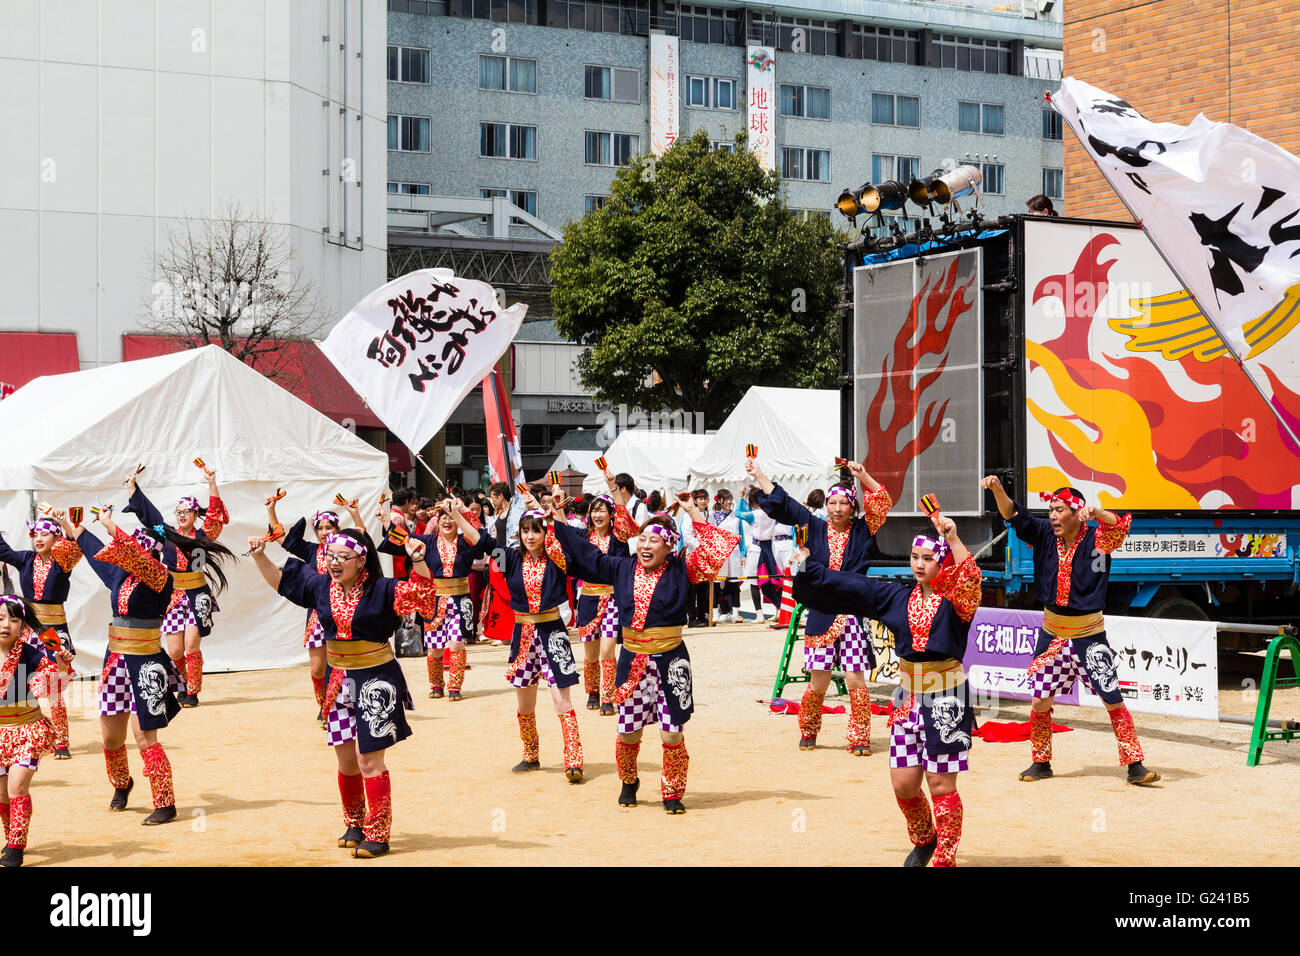 Japanese Hinokuni Yosakoi dance festival. Formation of children and teenage dancers in public square dancing wearing colourful yukata jackets. Stock Photo